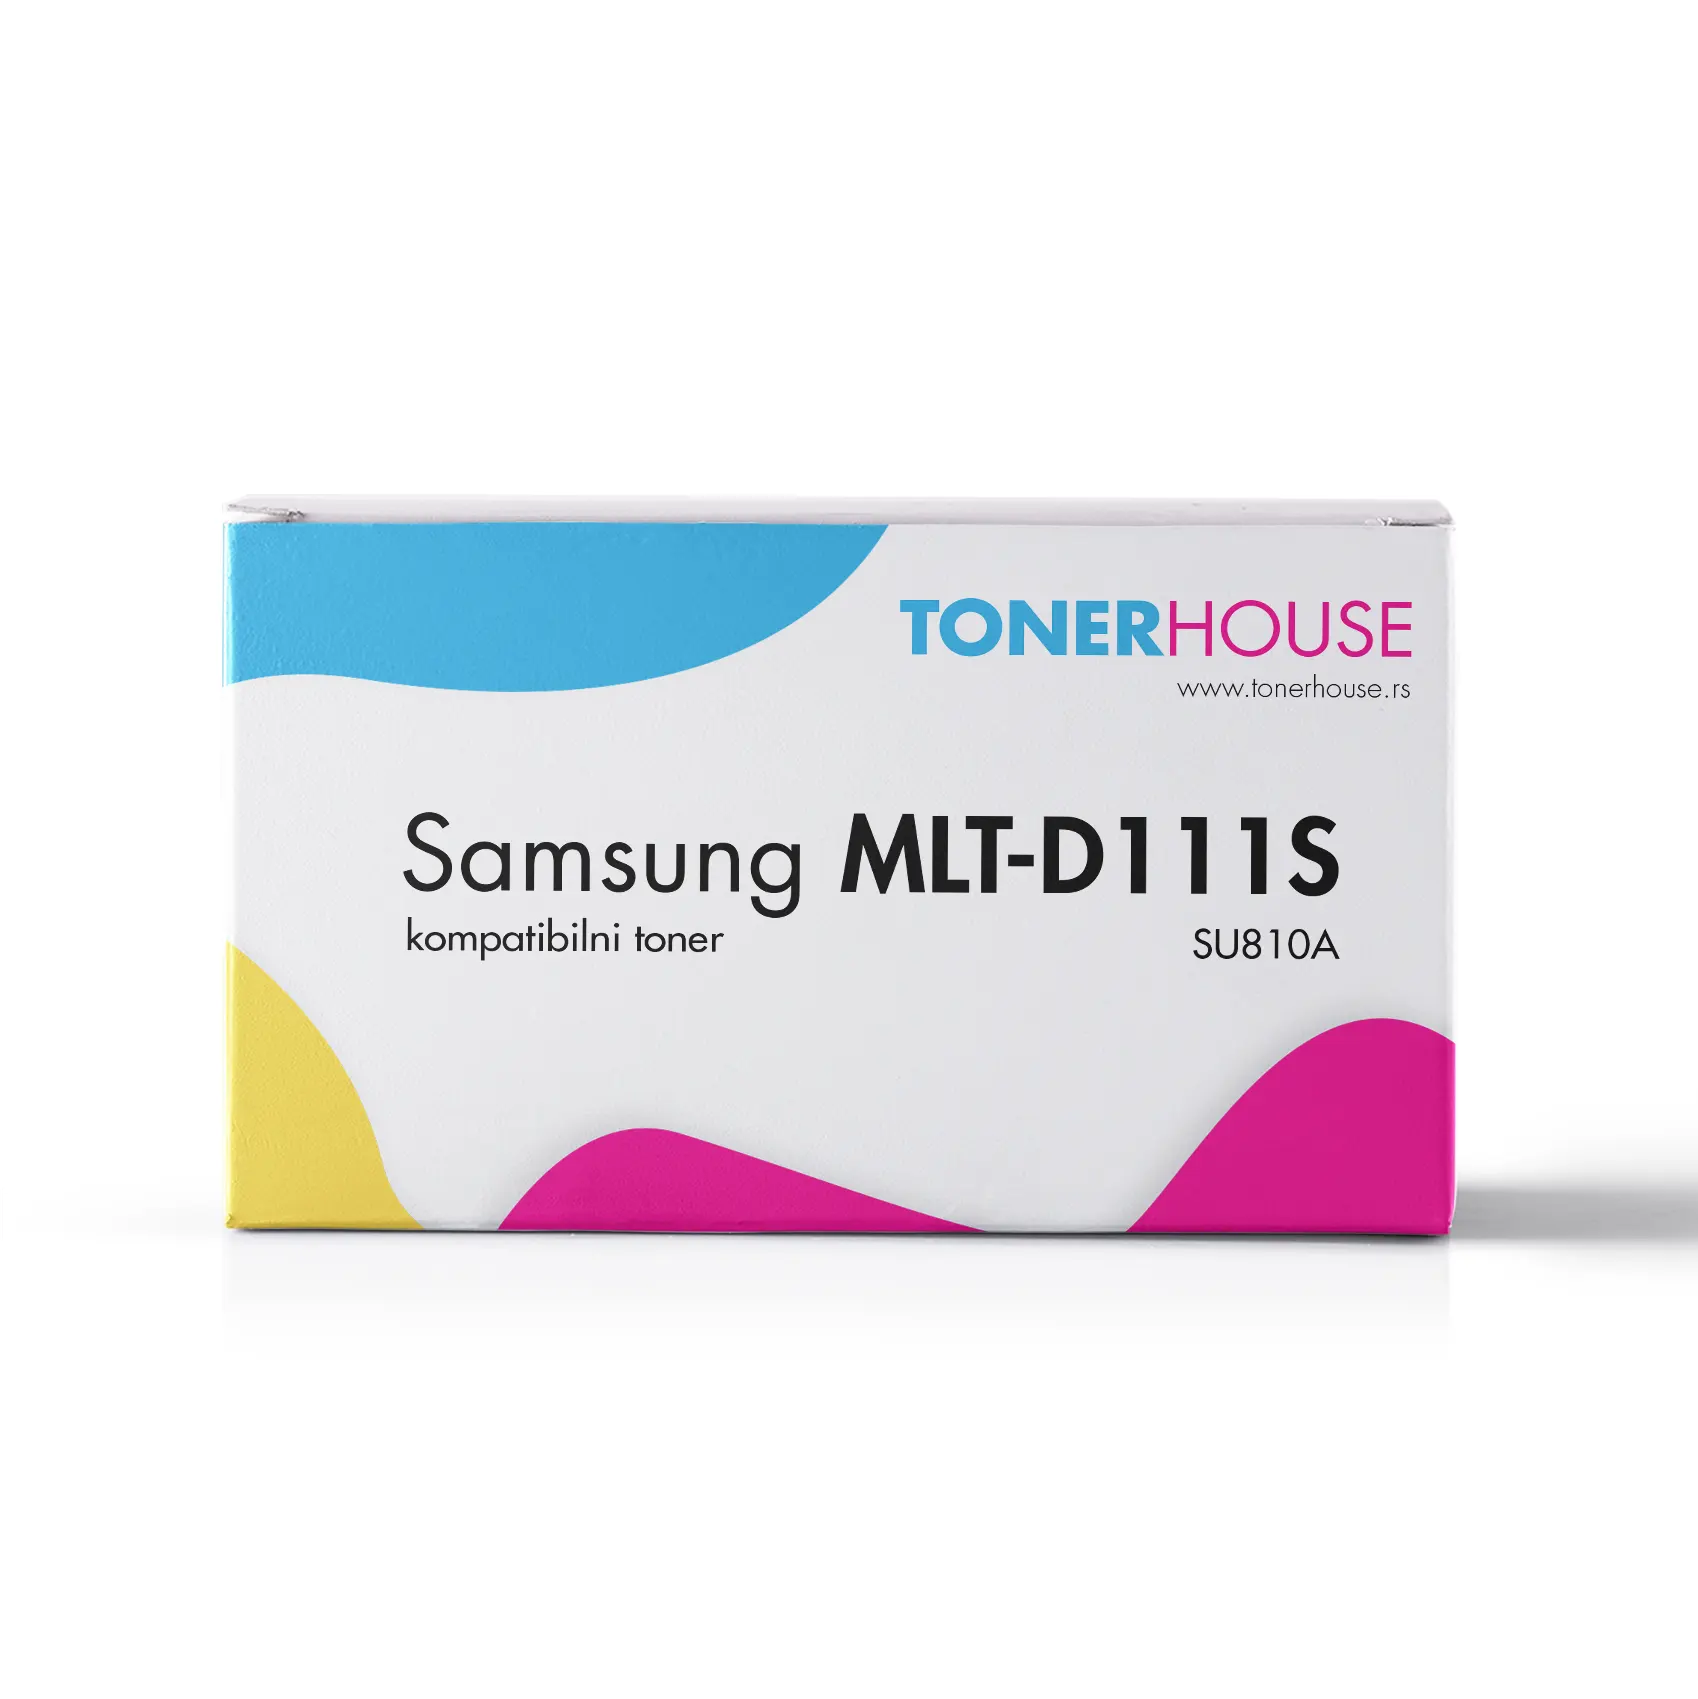 Samsung MLT-D111S Toner Kompatibilni